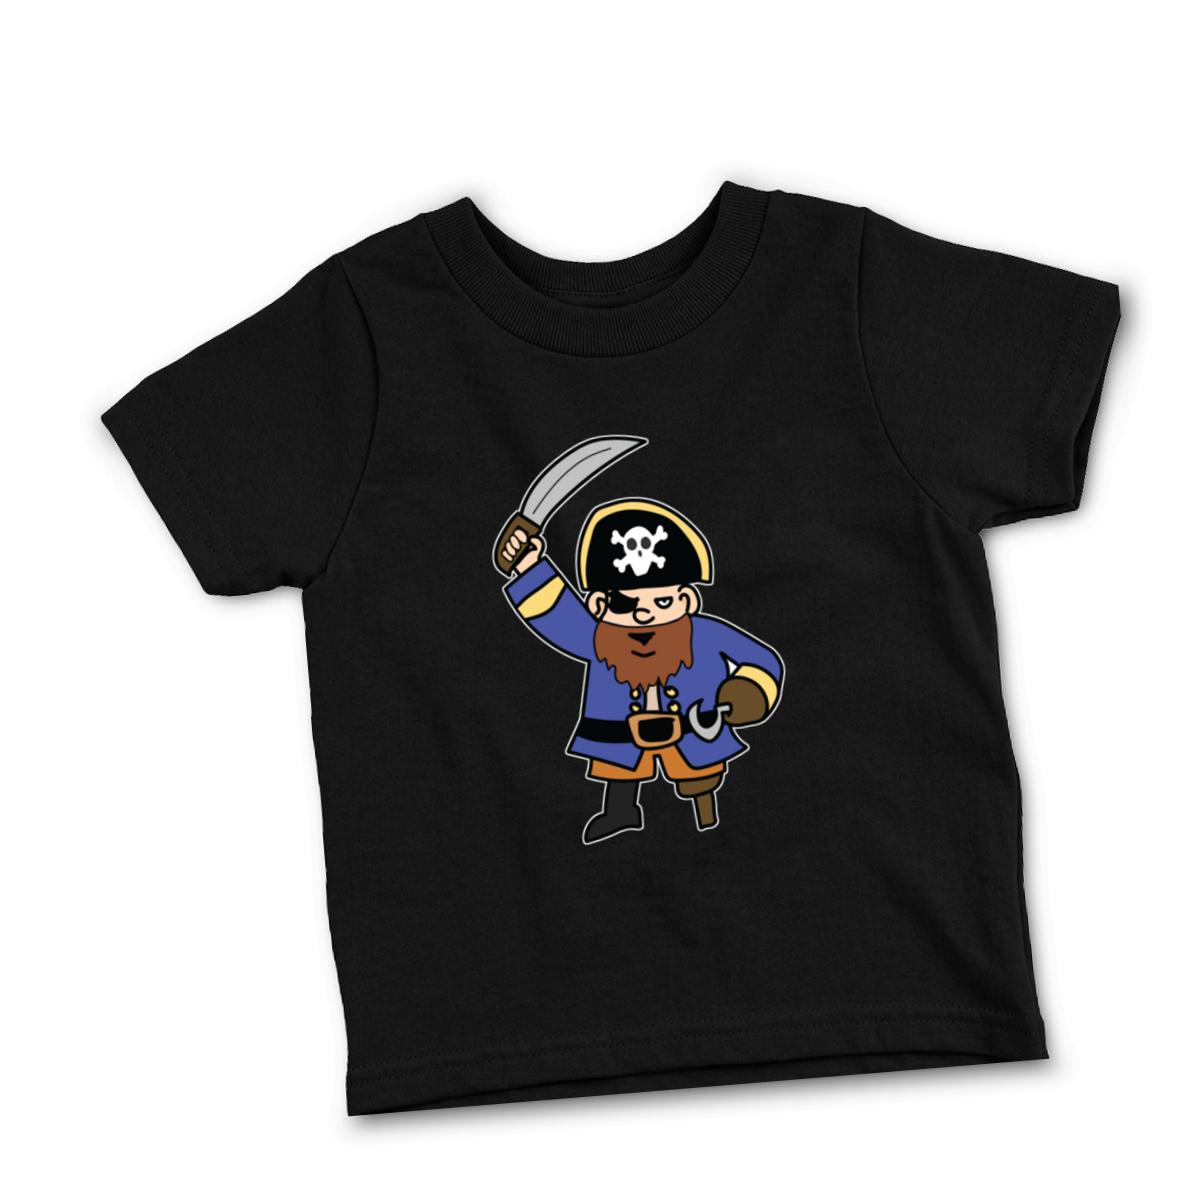 Pirate Infant Tee 18M black